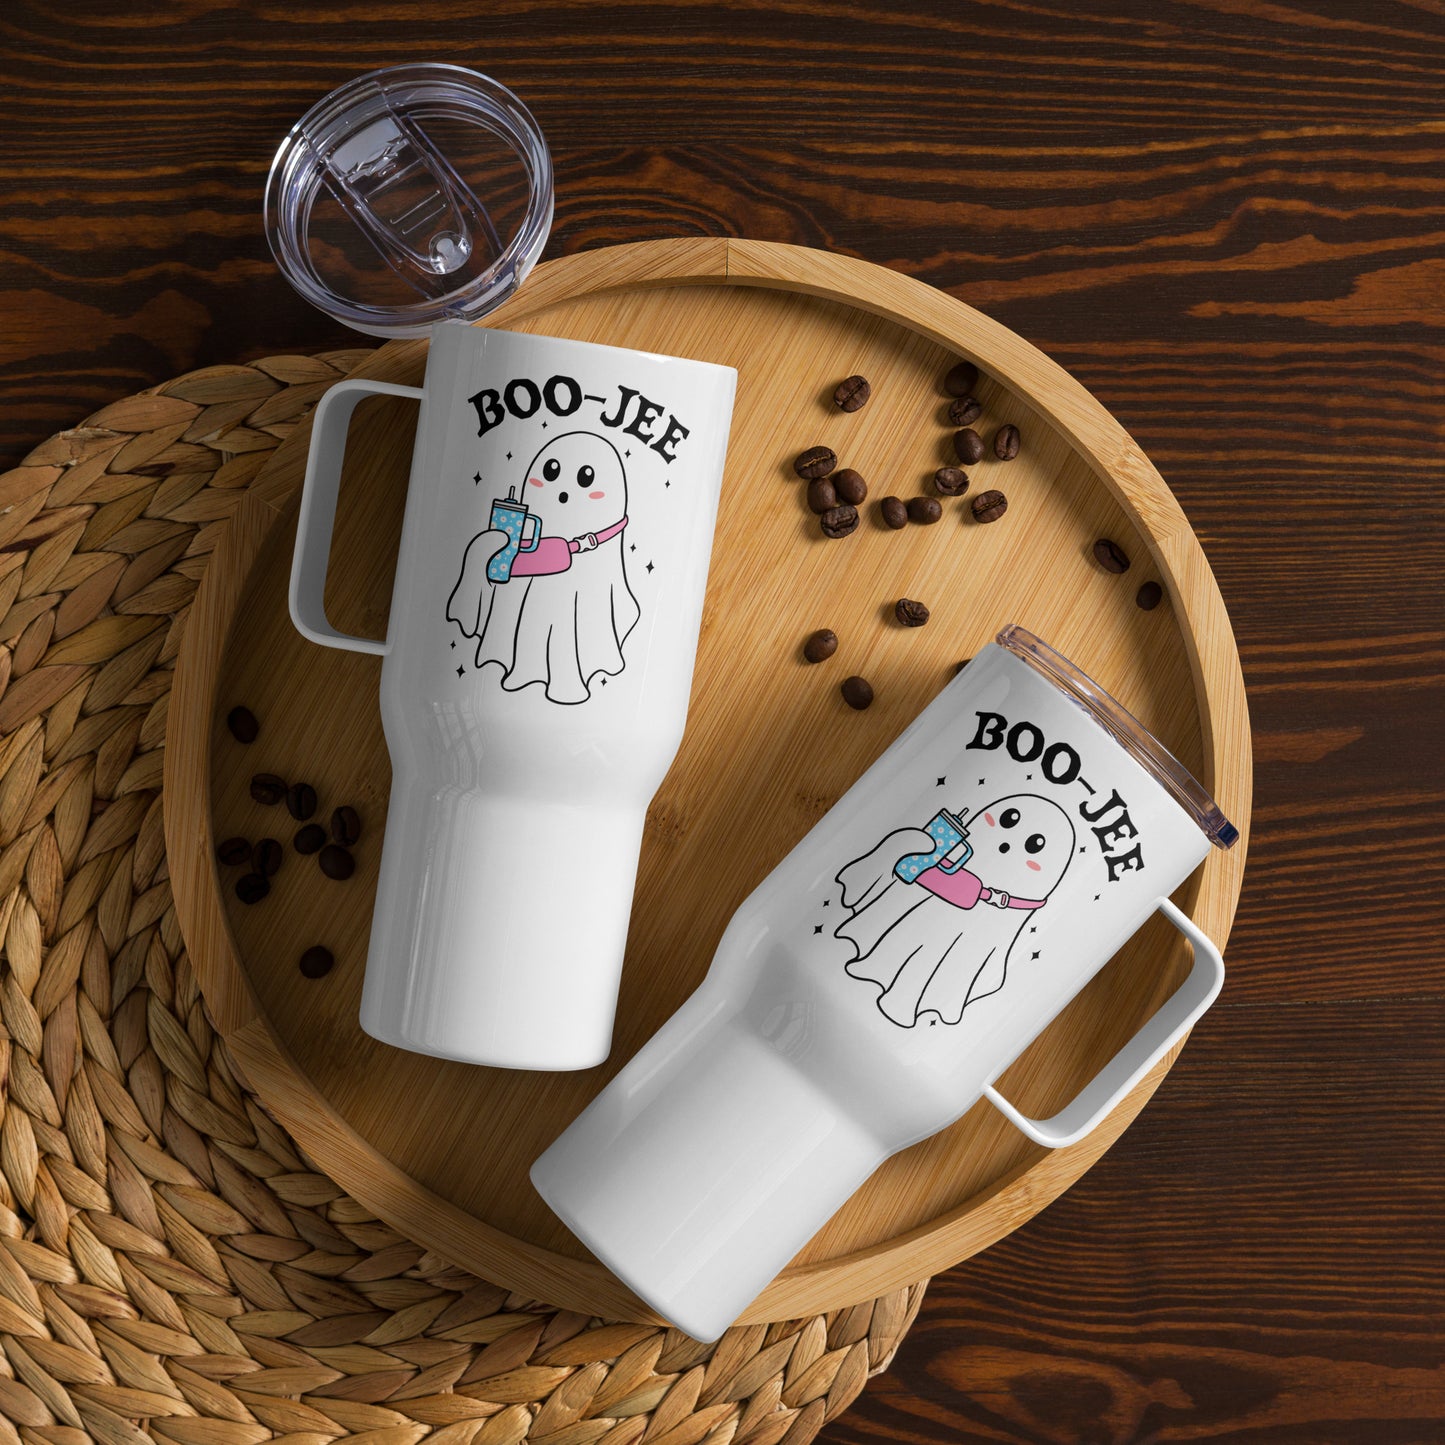 Boo-Jee Travel mug with a handle